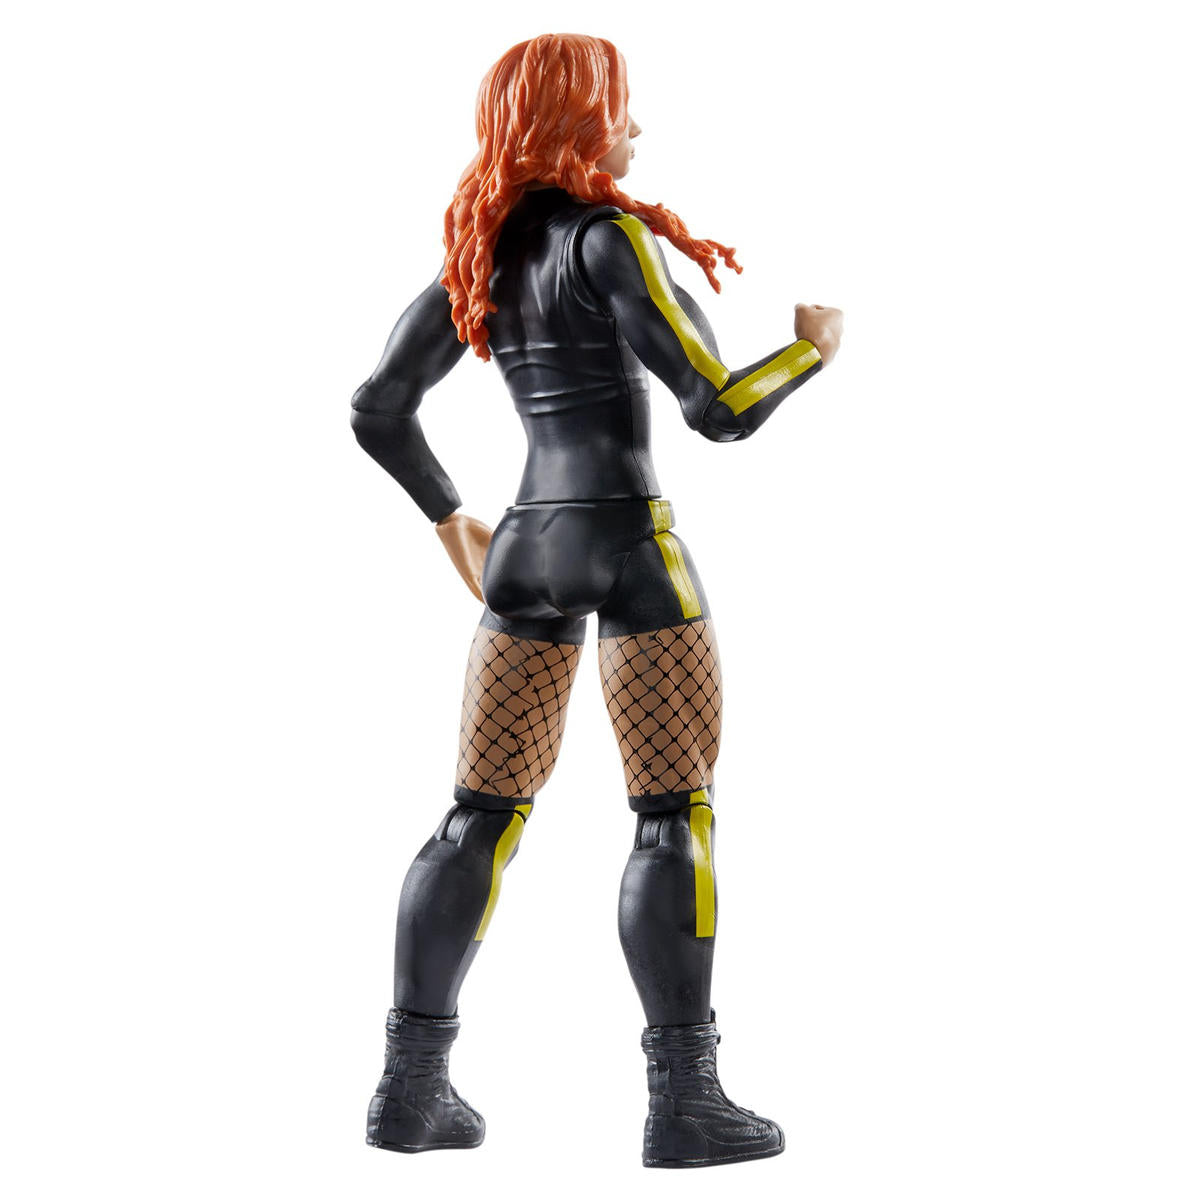 2020 WWE Mattel Basic WrestleMania 36 Becky Lynch